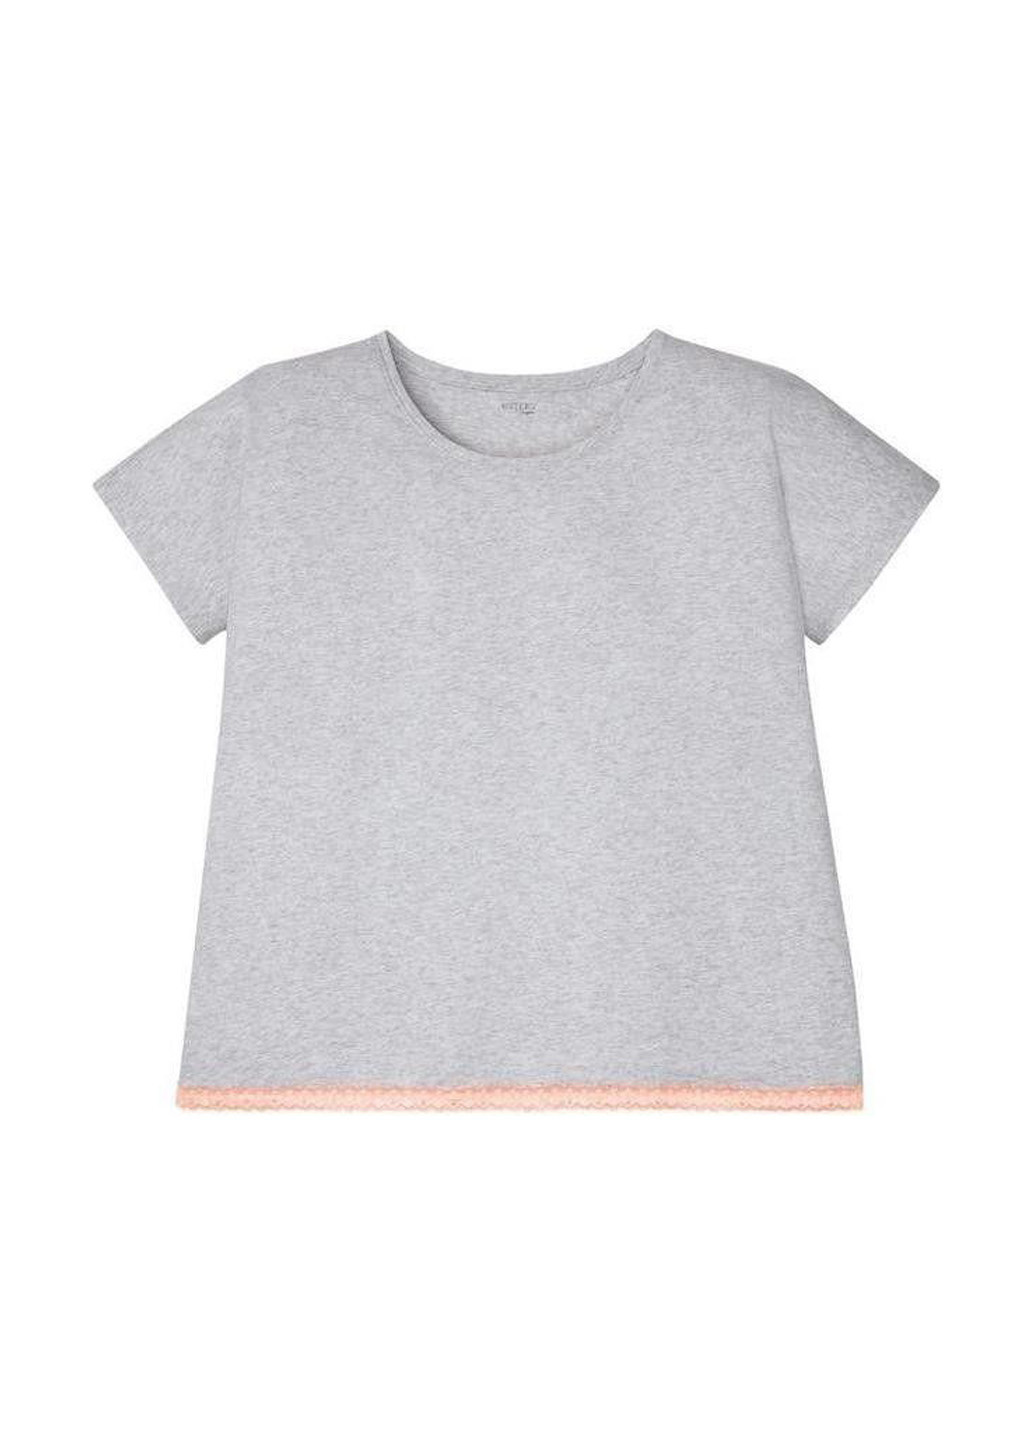 Сіра всесезон піжама (футболка, бриджі) футболка+ бриджі Esmara